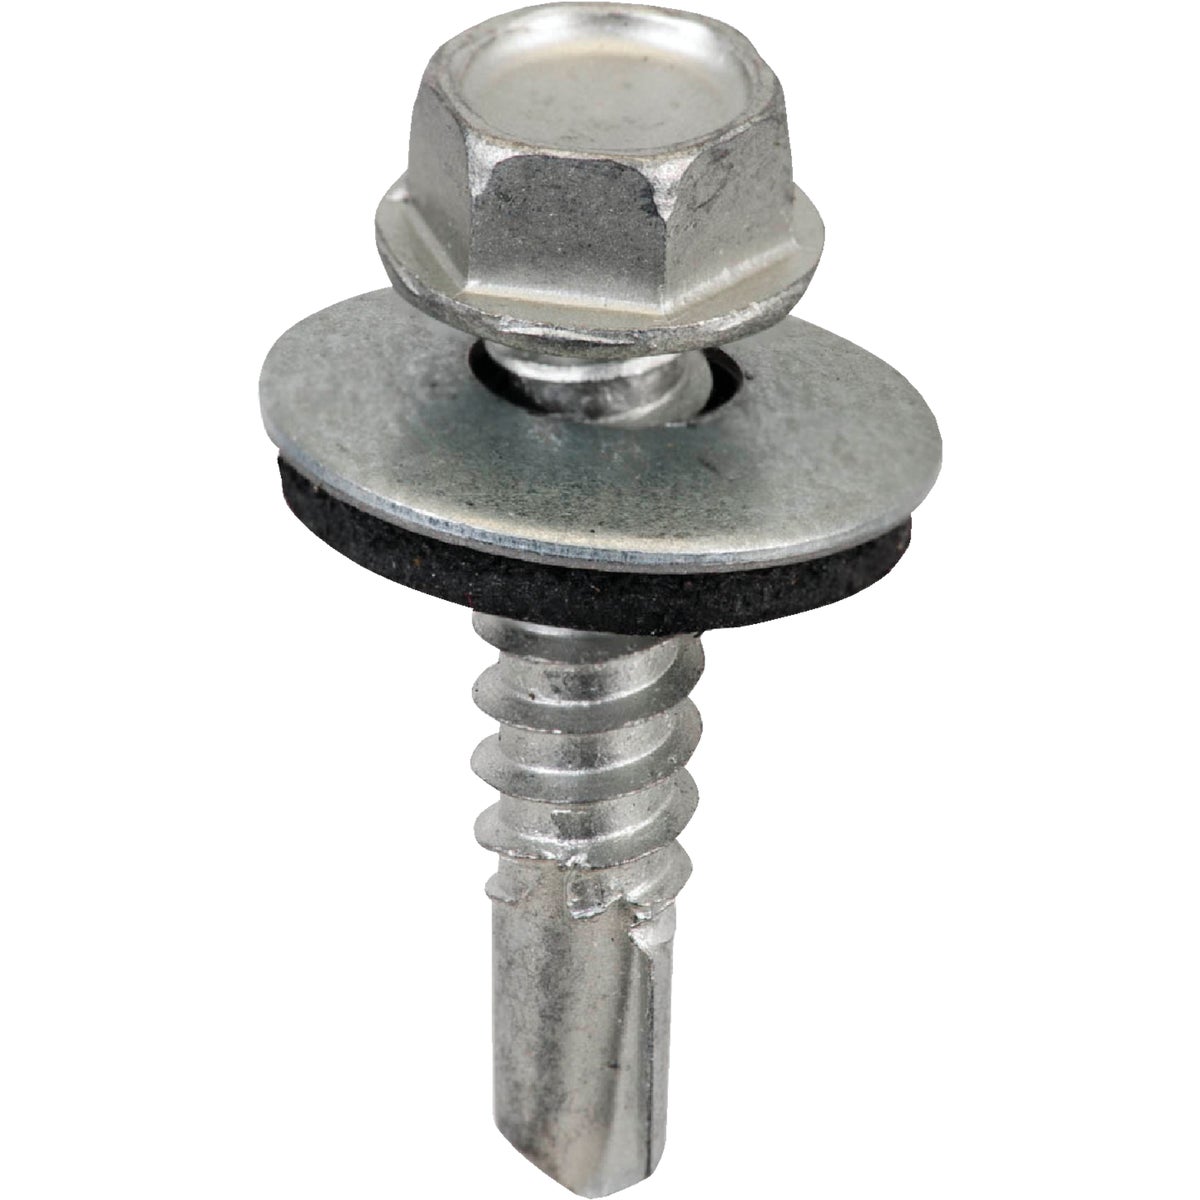 Item 201033, Metal to metal galvanized screw. C1022 steel. 1,000 hour Dacro coating.